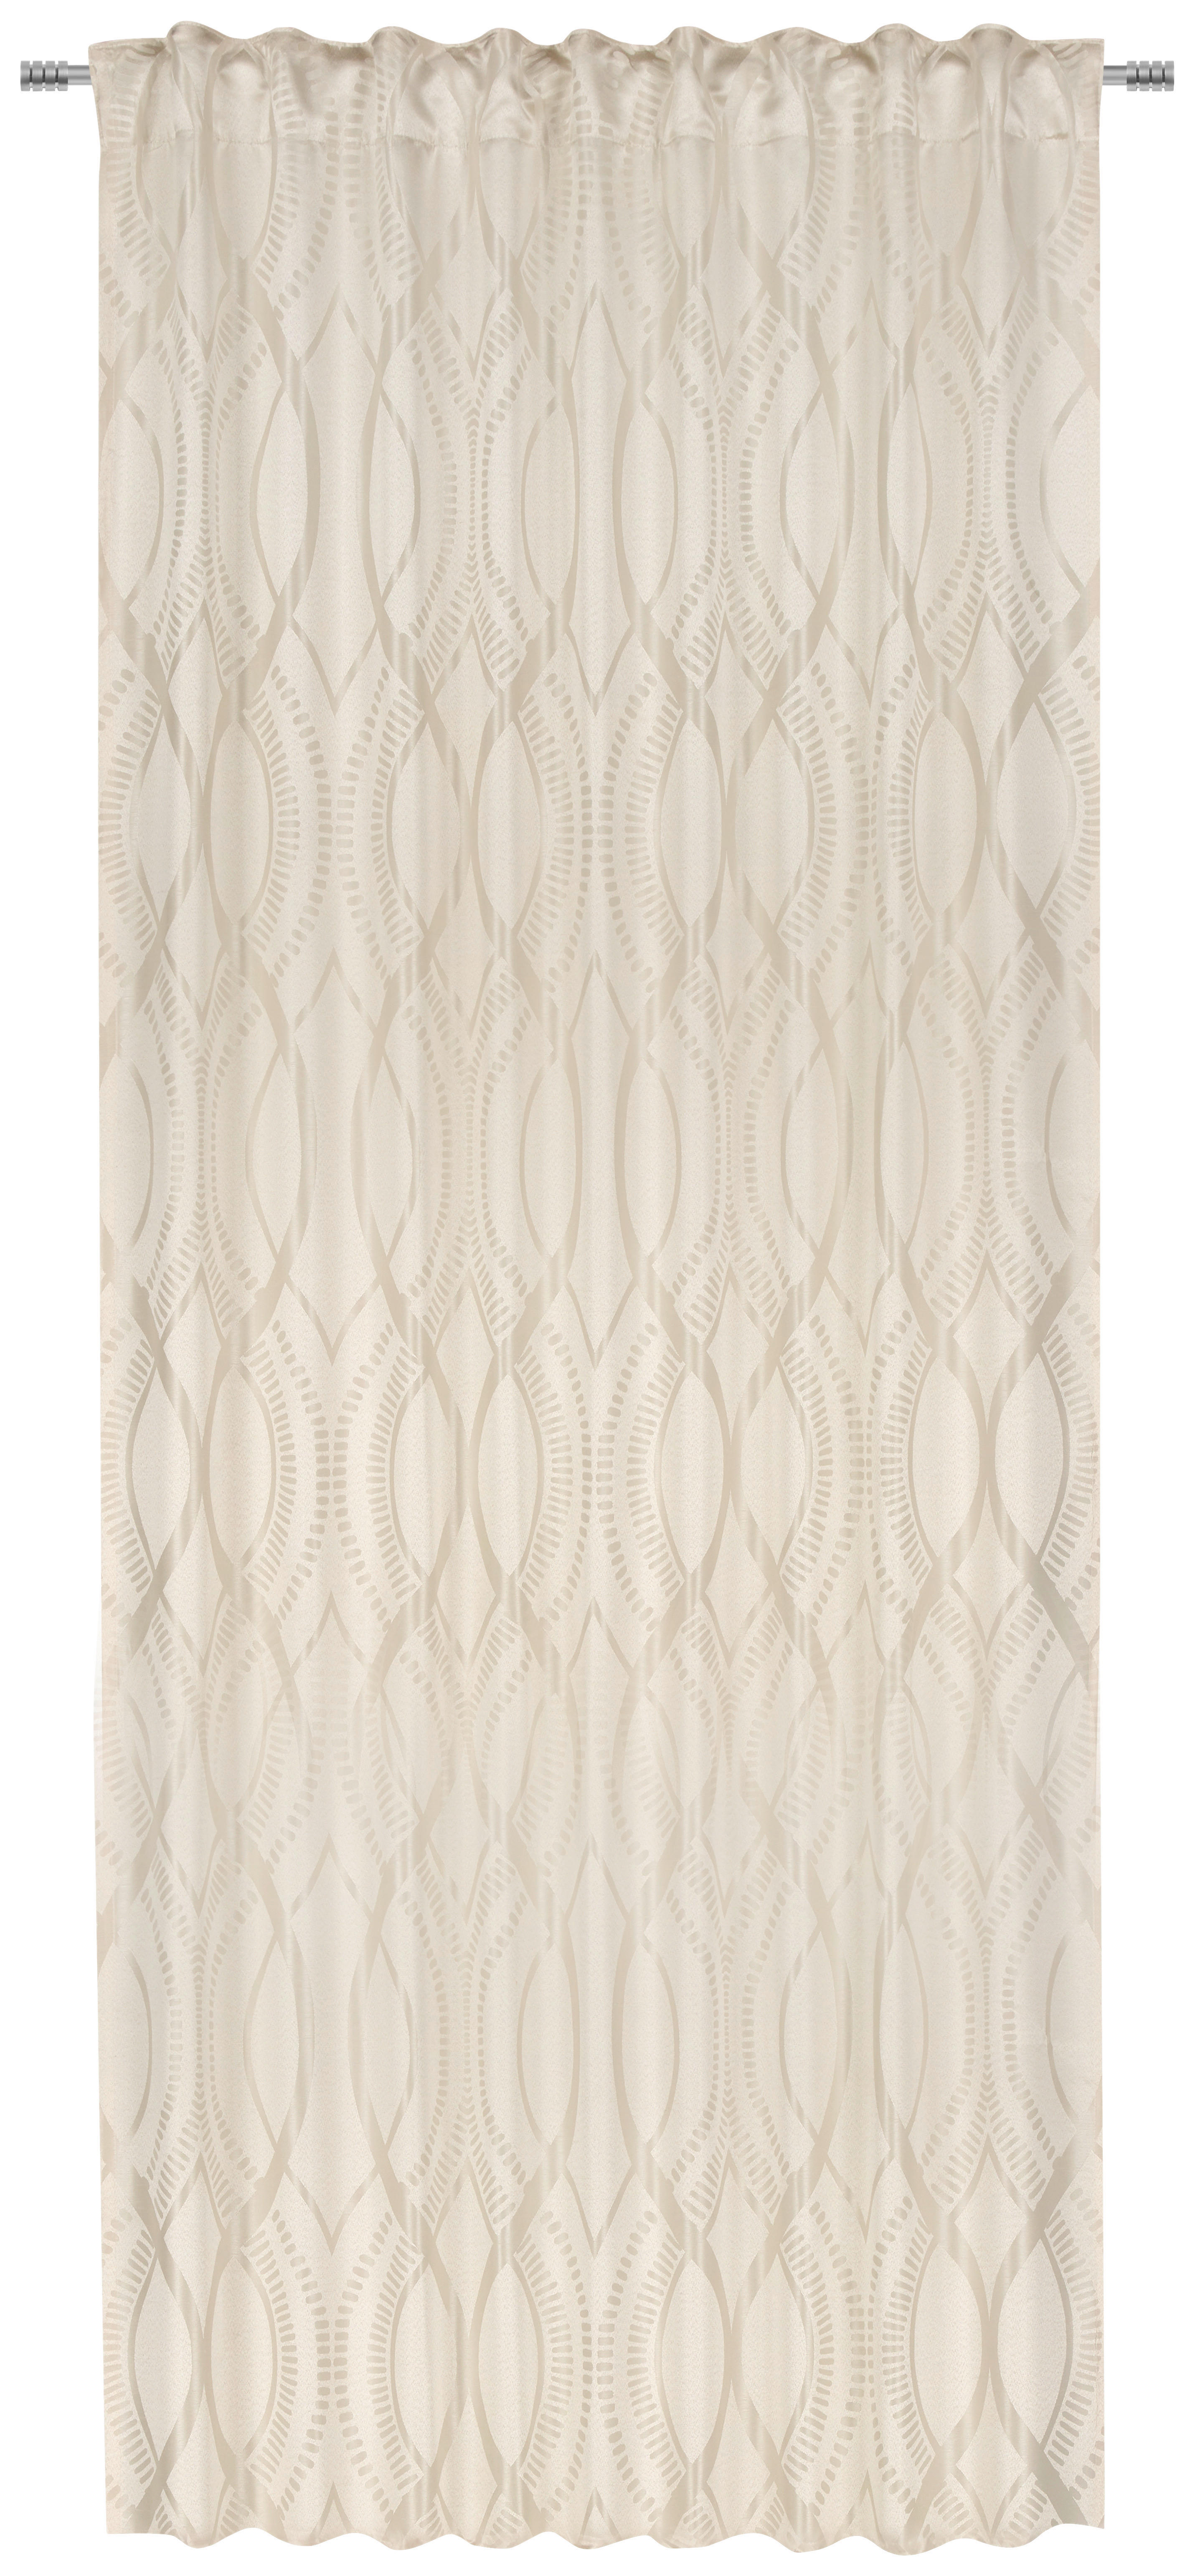 GARDINLÄNGD ej transparent  - sandfärgad, Klassisk, textil (140/245cm) - Esposa